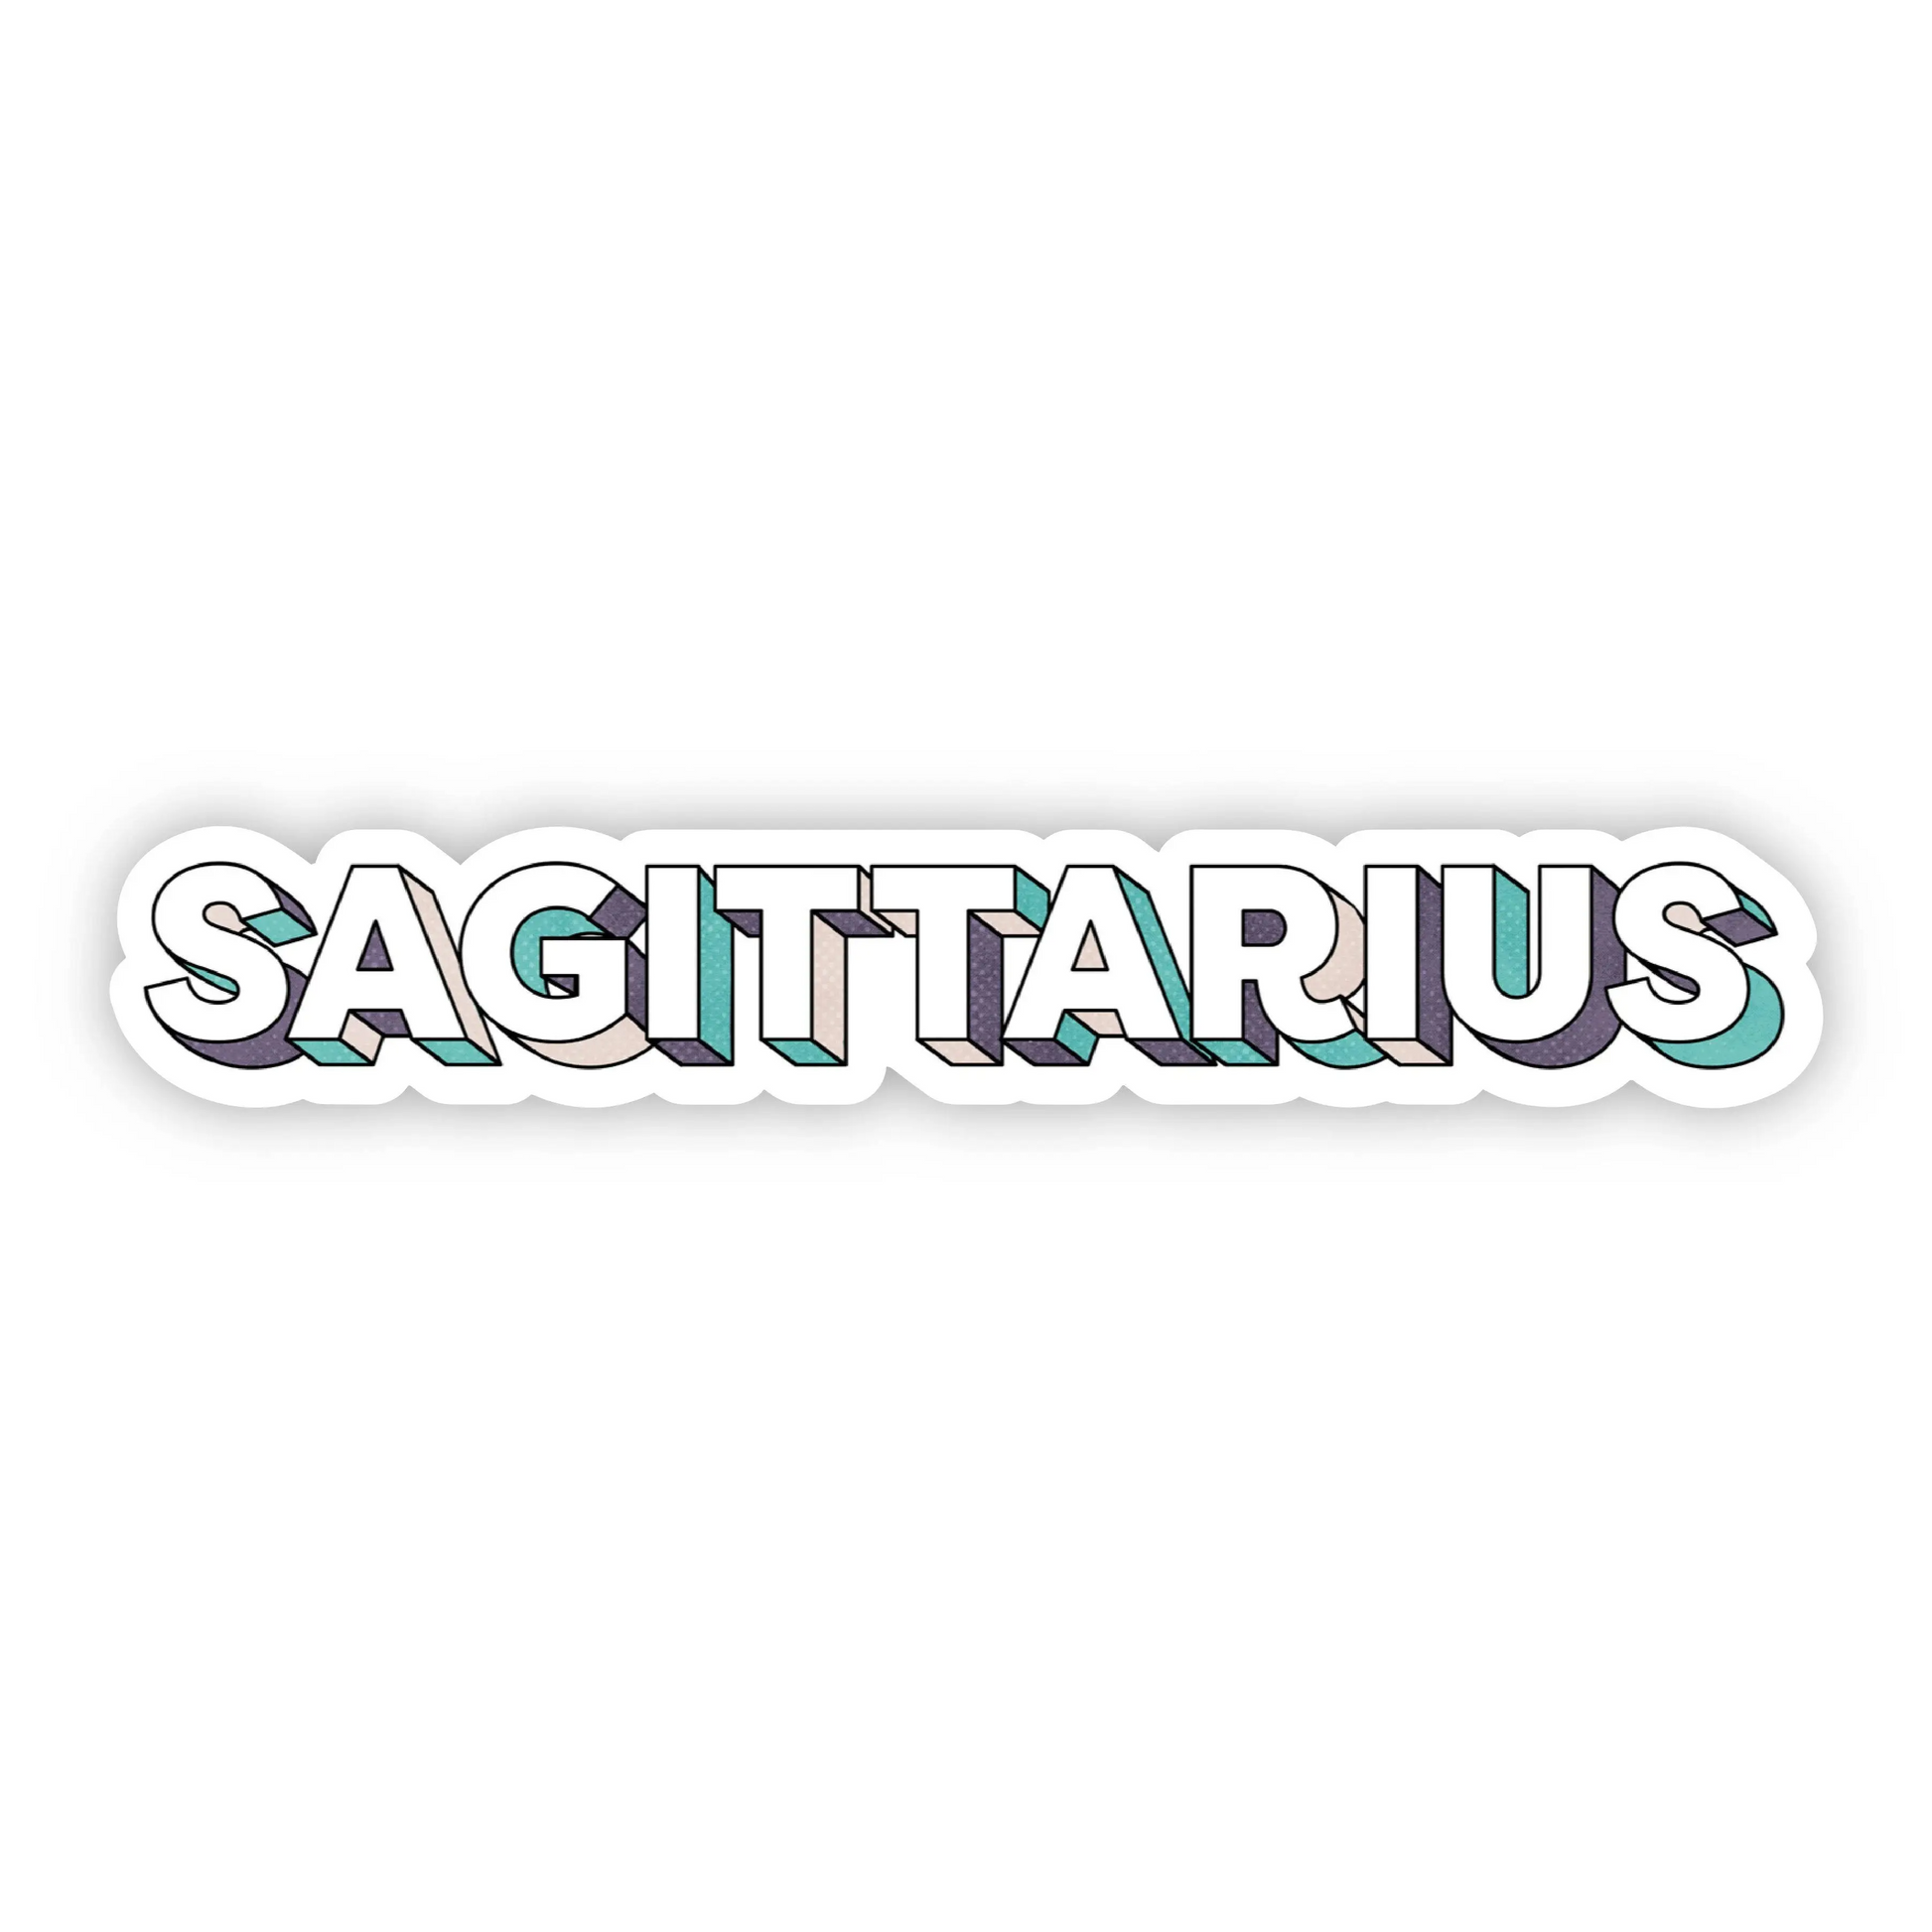 Sagittarius - Vinyl Decal Sticker - Mellow Monkey